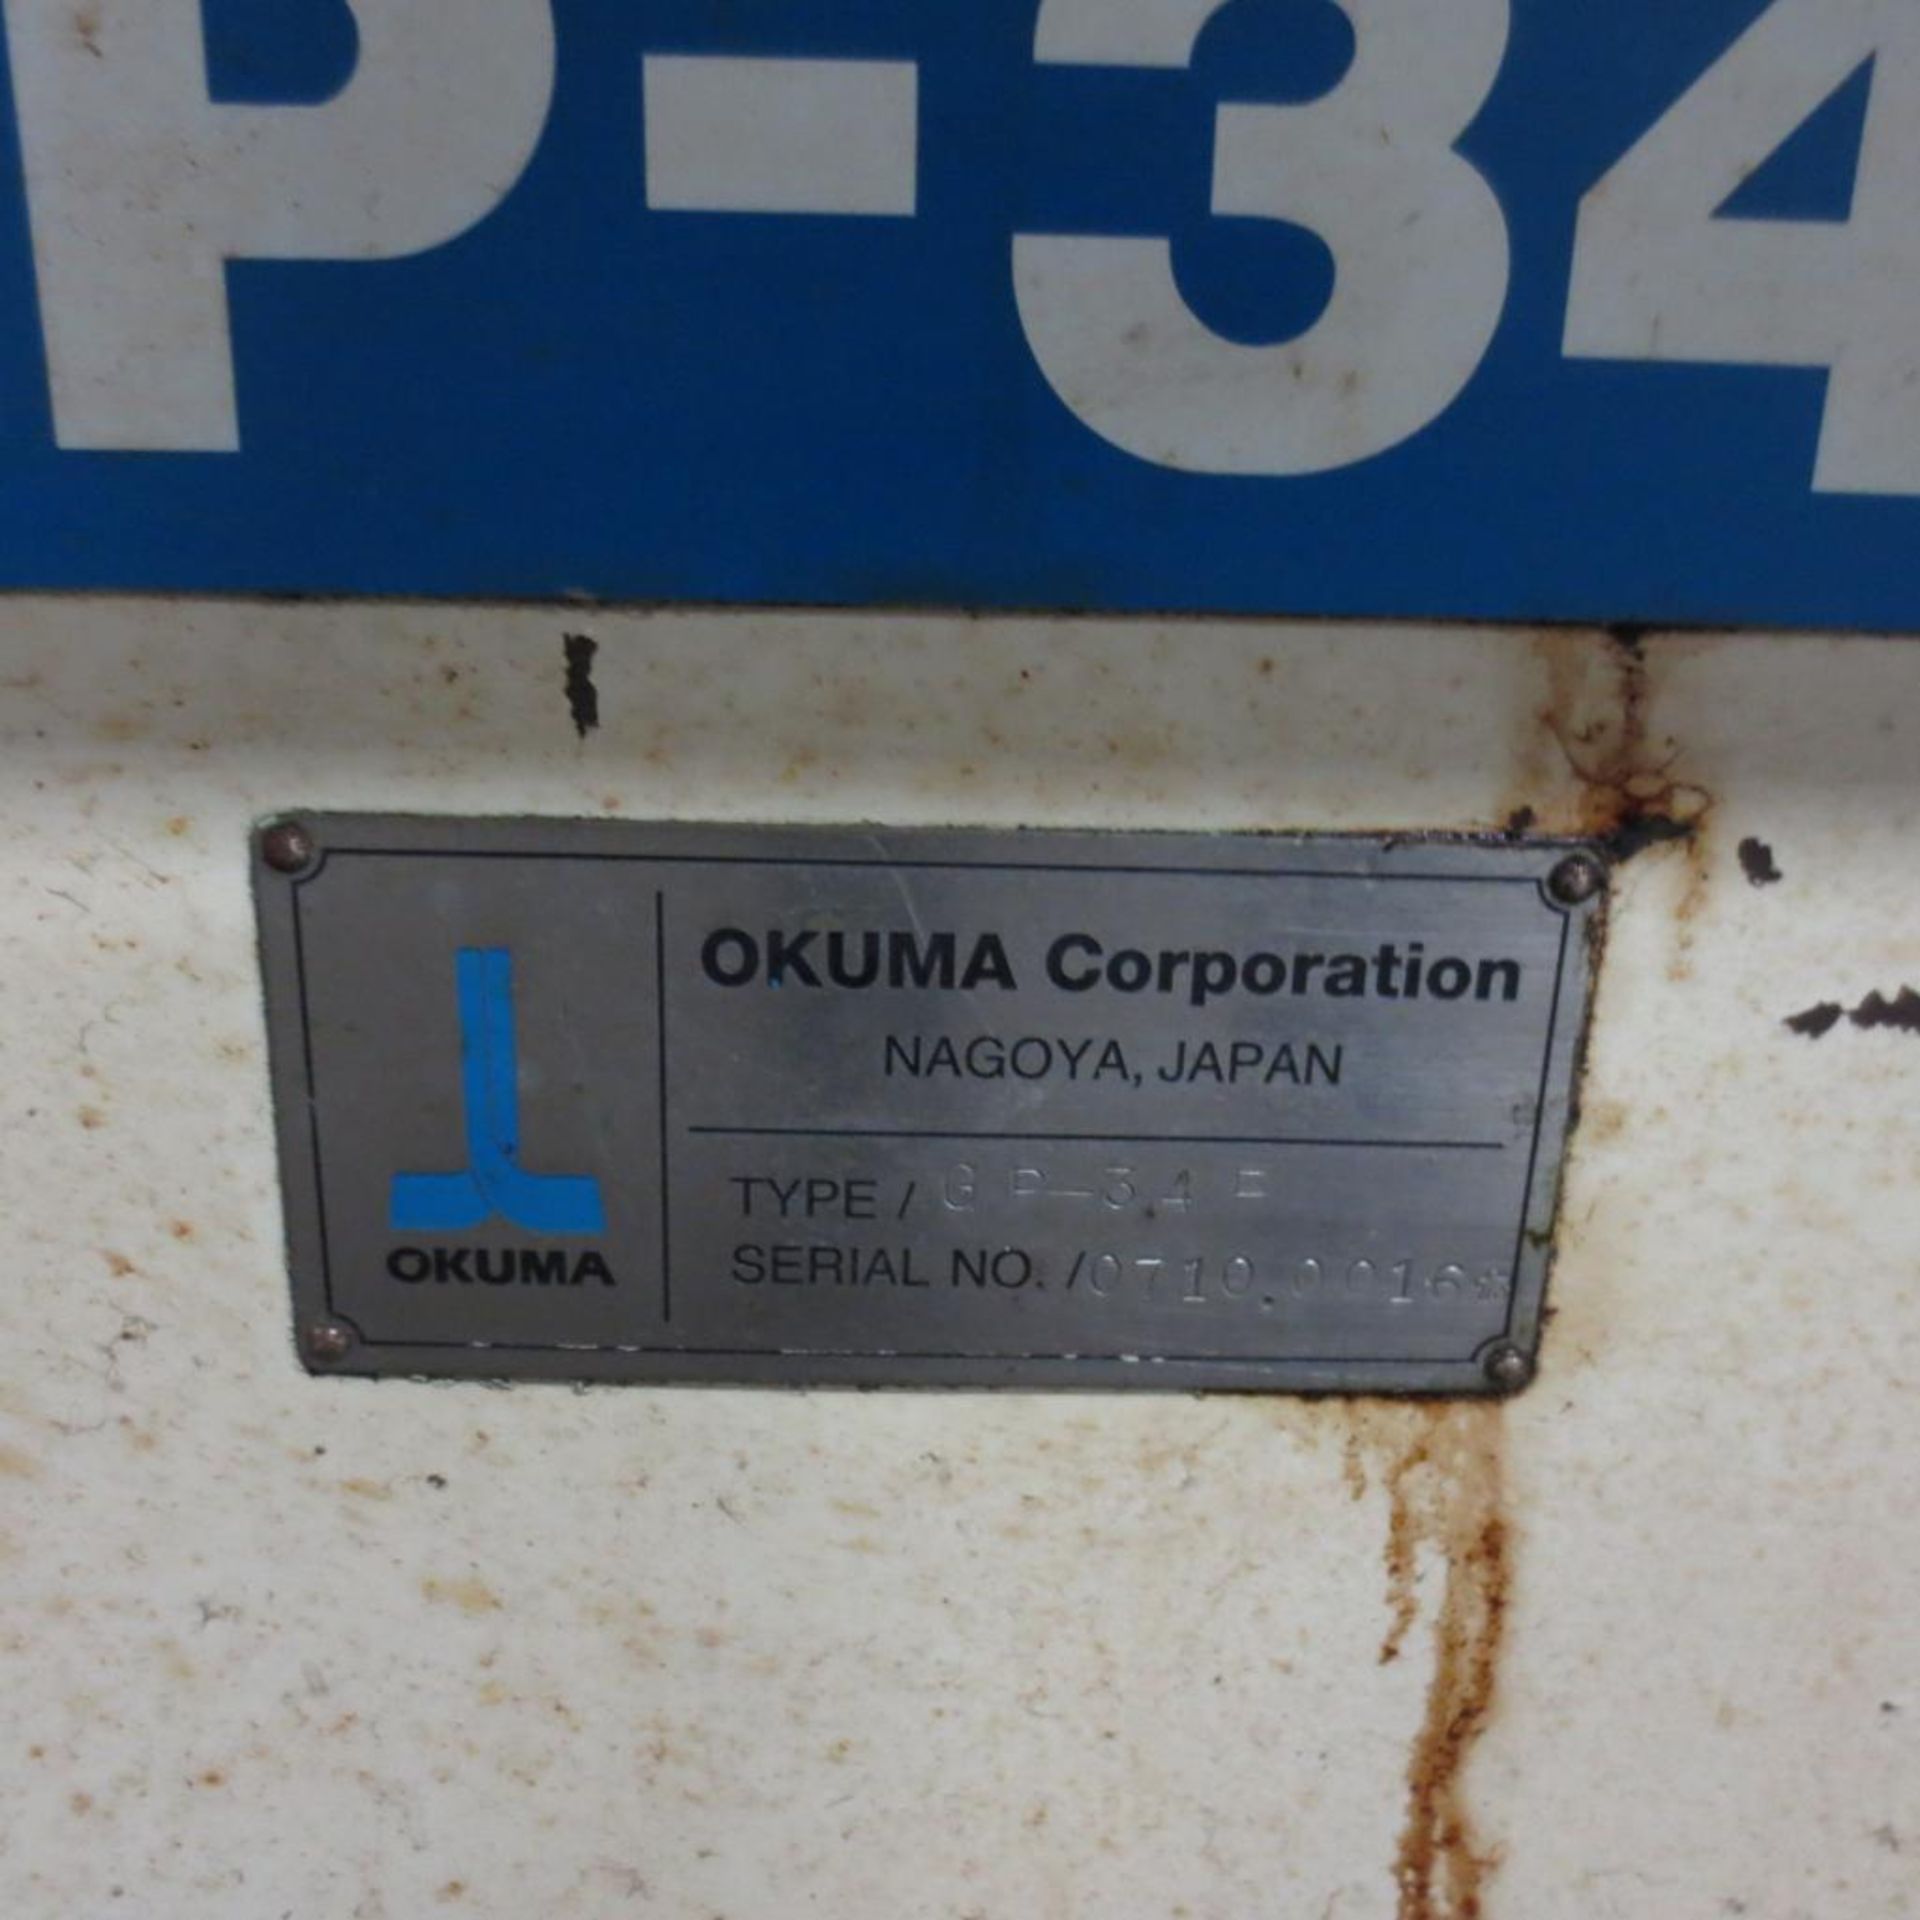 Okuma GP-34FOD CNC Cylindrical Grinder, S/N 0016. Loaidng Fee is $850.00 - Image 2 of 7